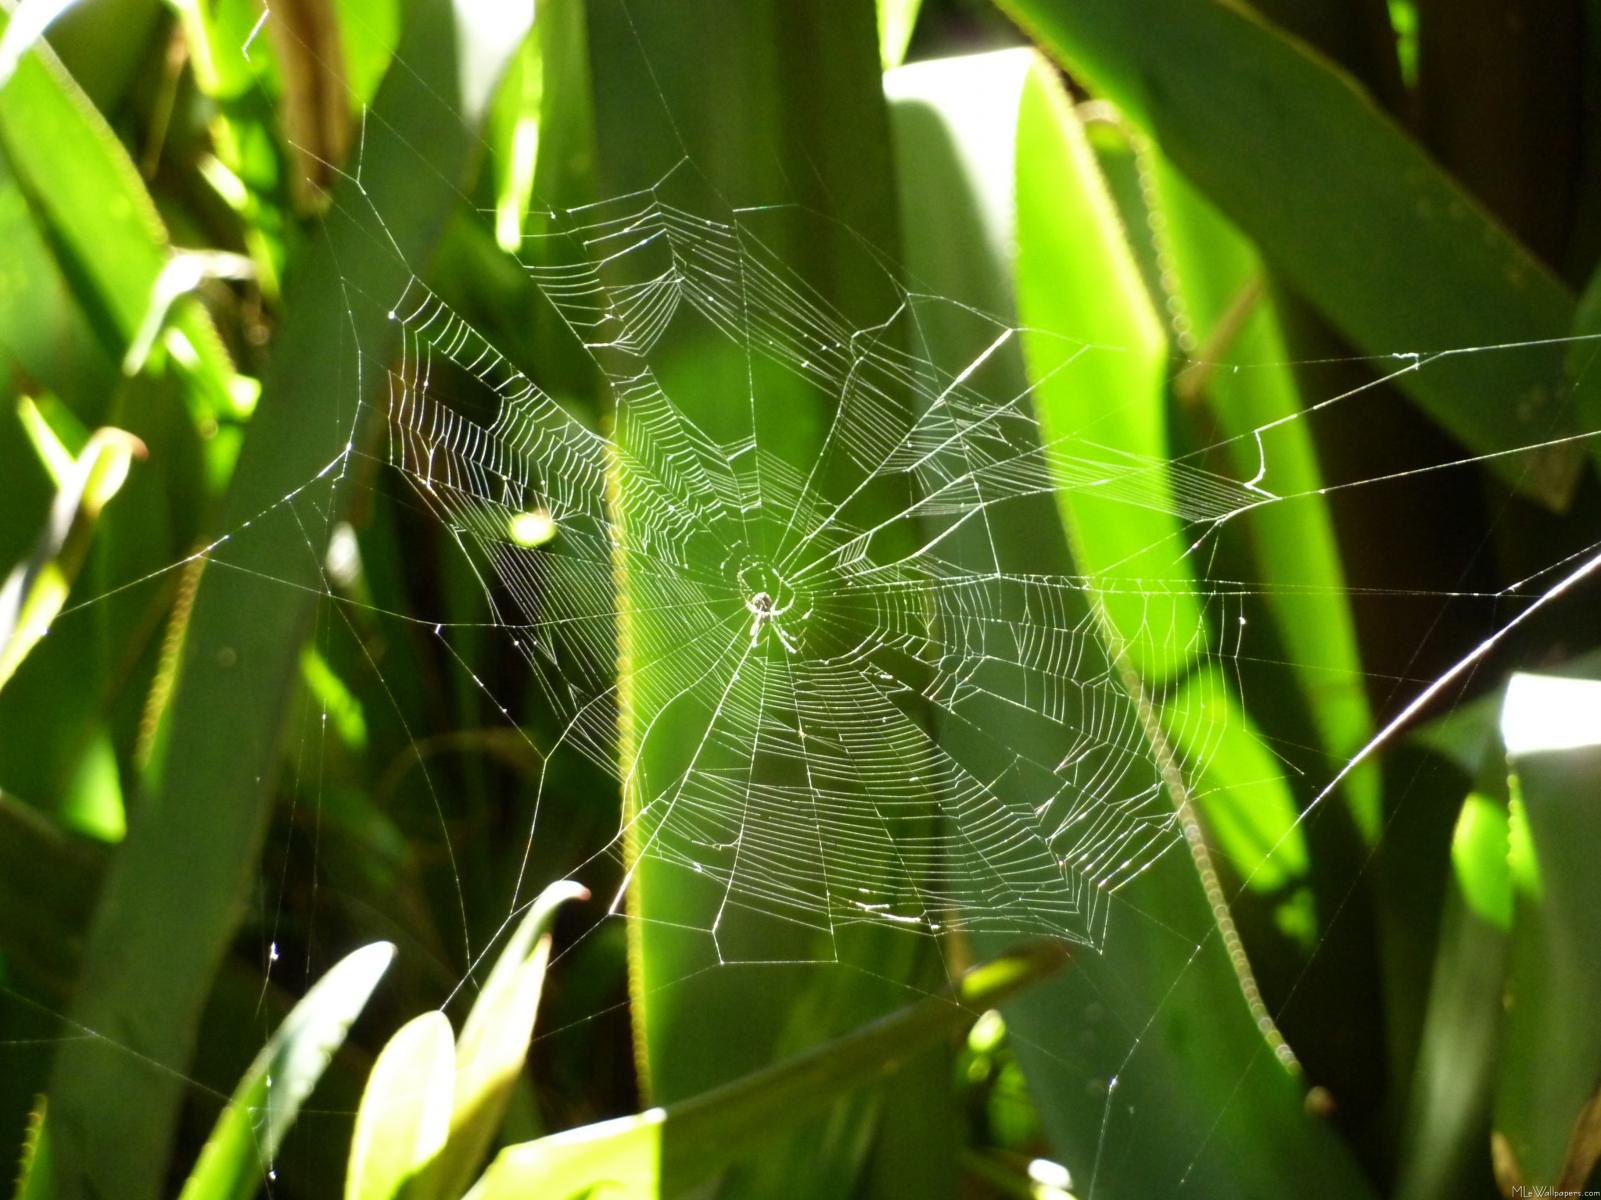 MLeWallpaperscom   Spiderweb in Tropical Leaves 1601x1200